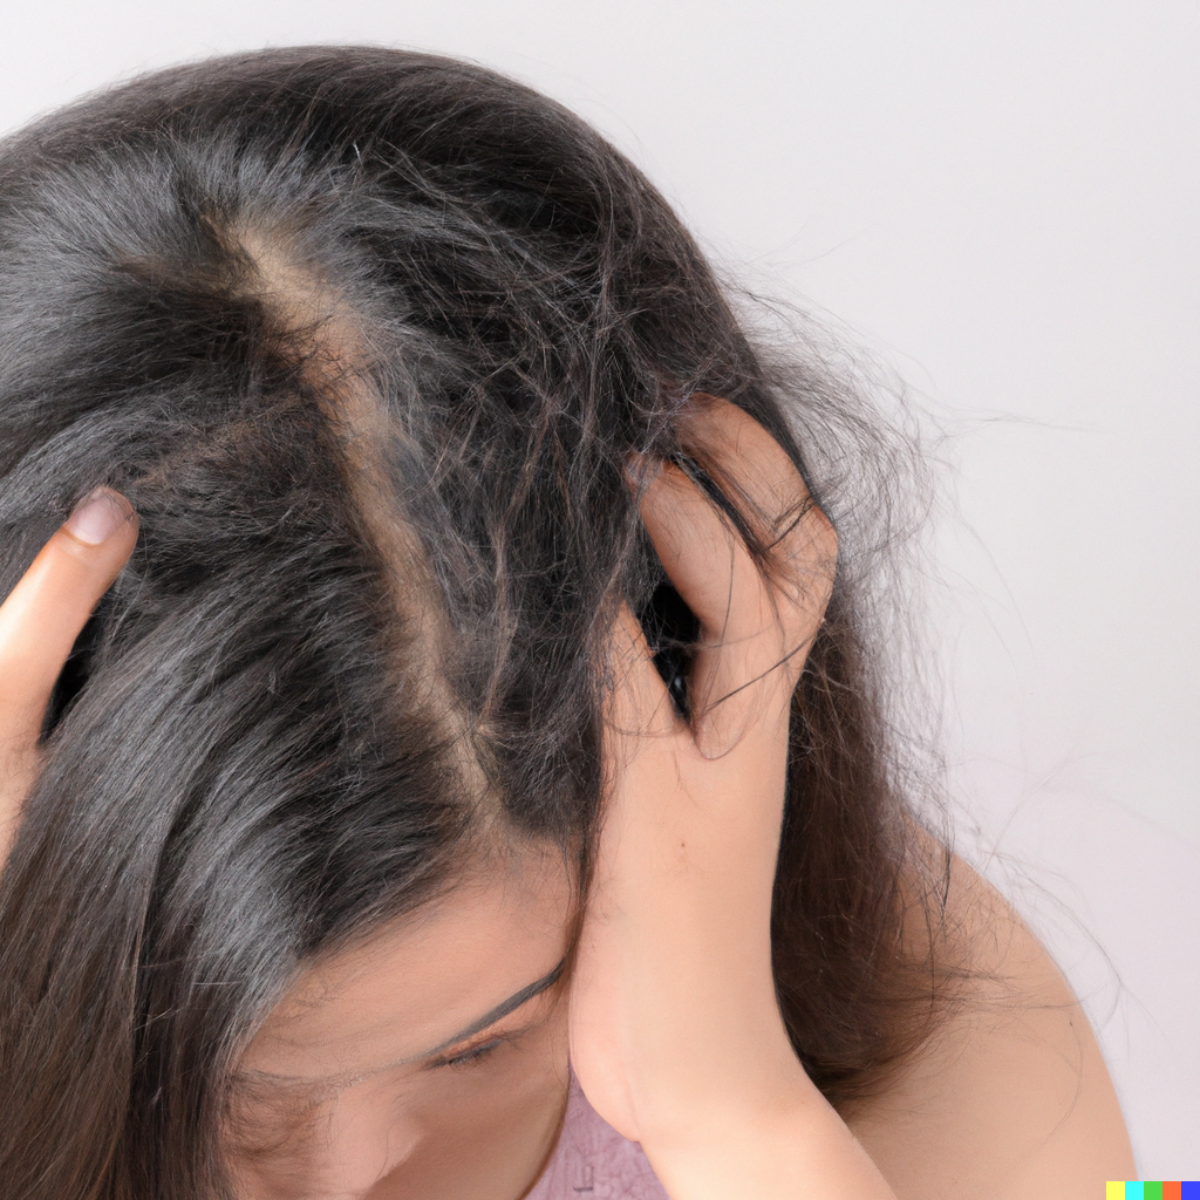 hair loss during pregnancy